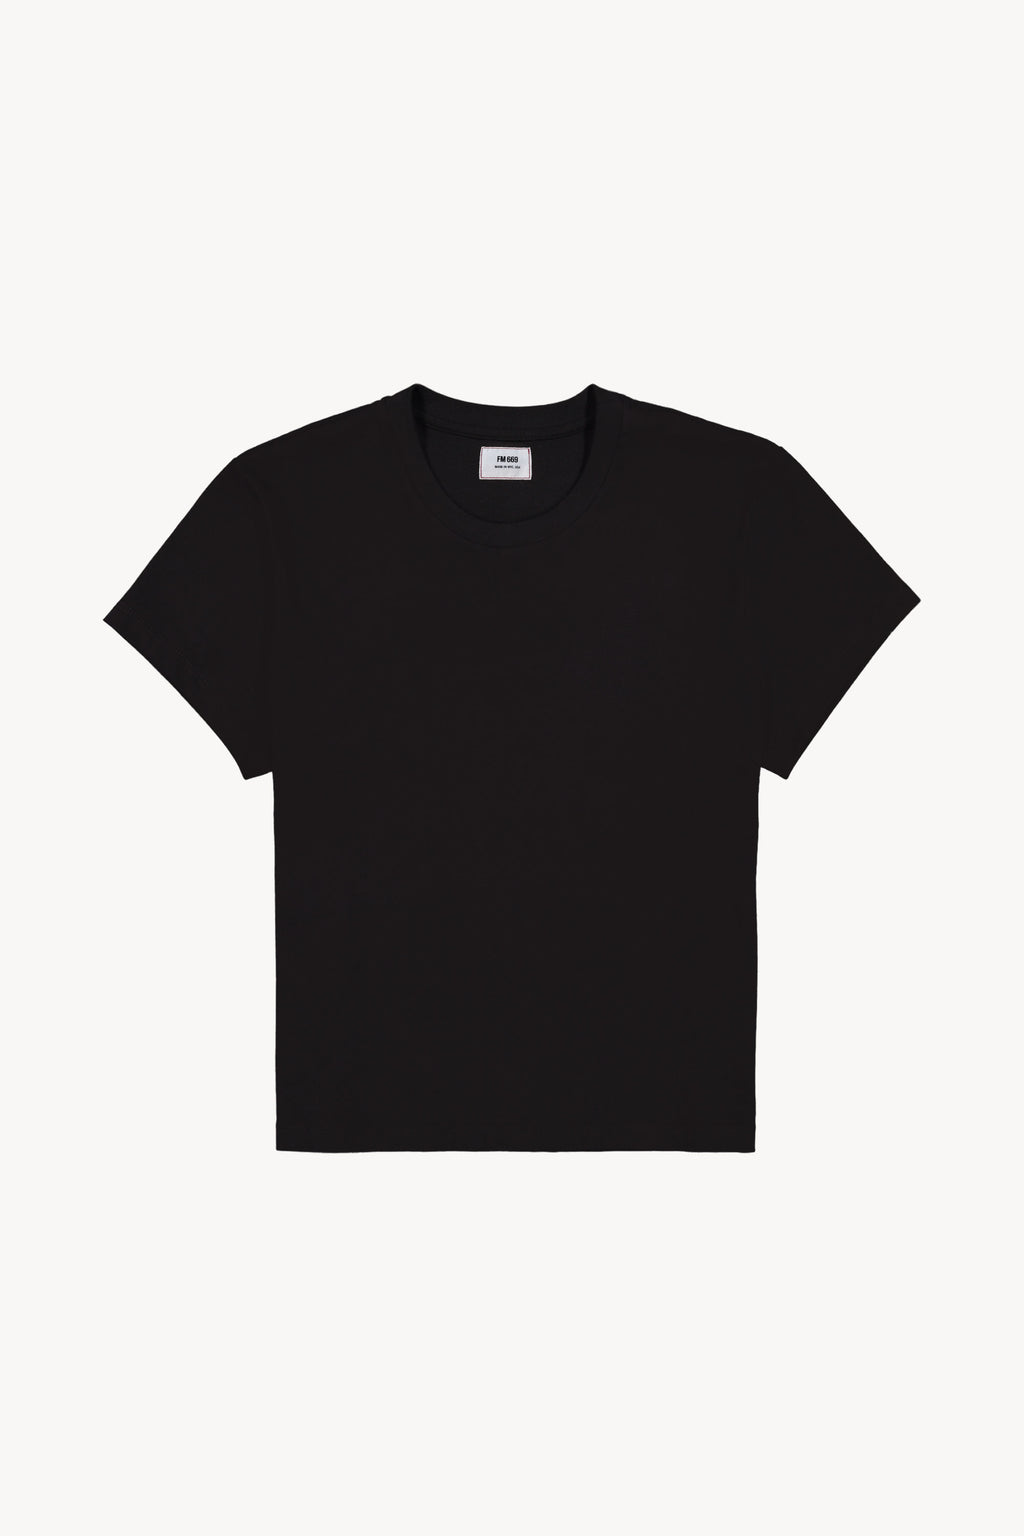 T102 Little T Shirt - Black | FM 669 | Made in | Grown Organic Cotton